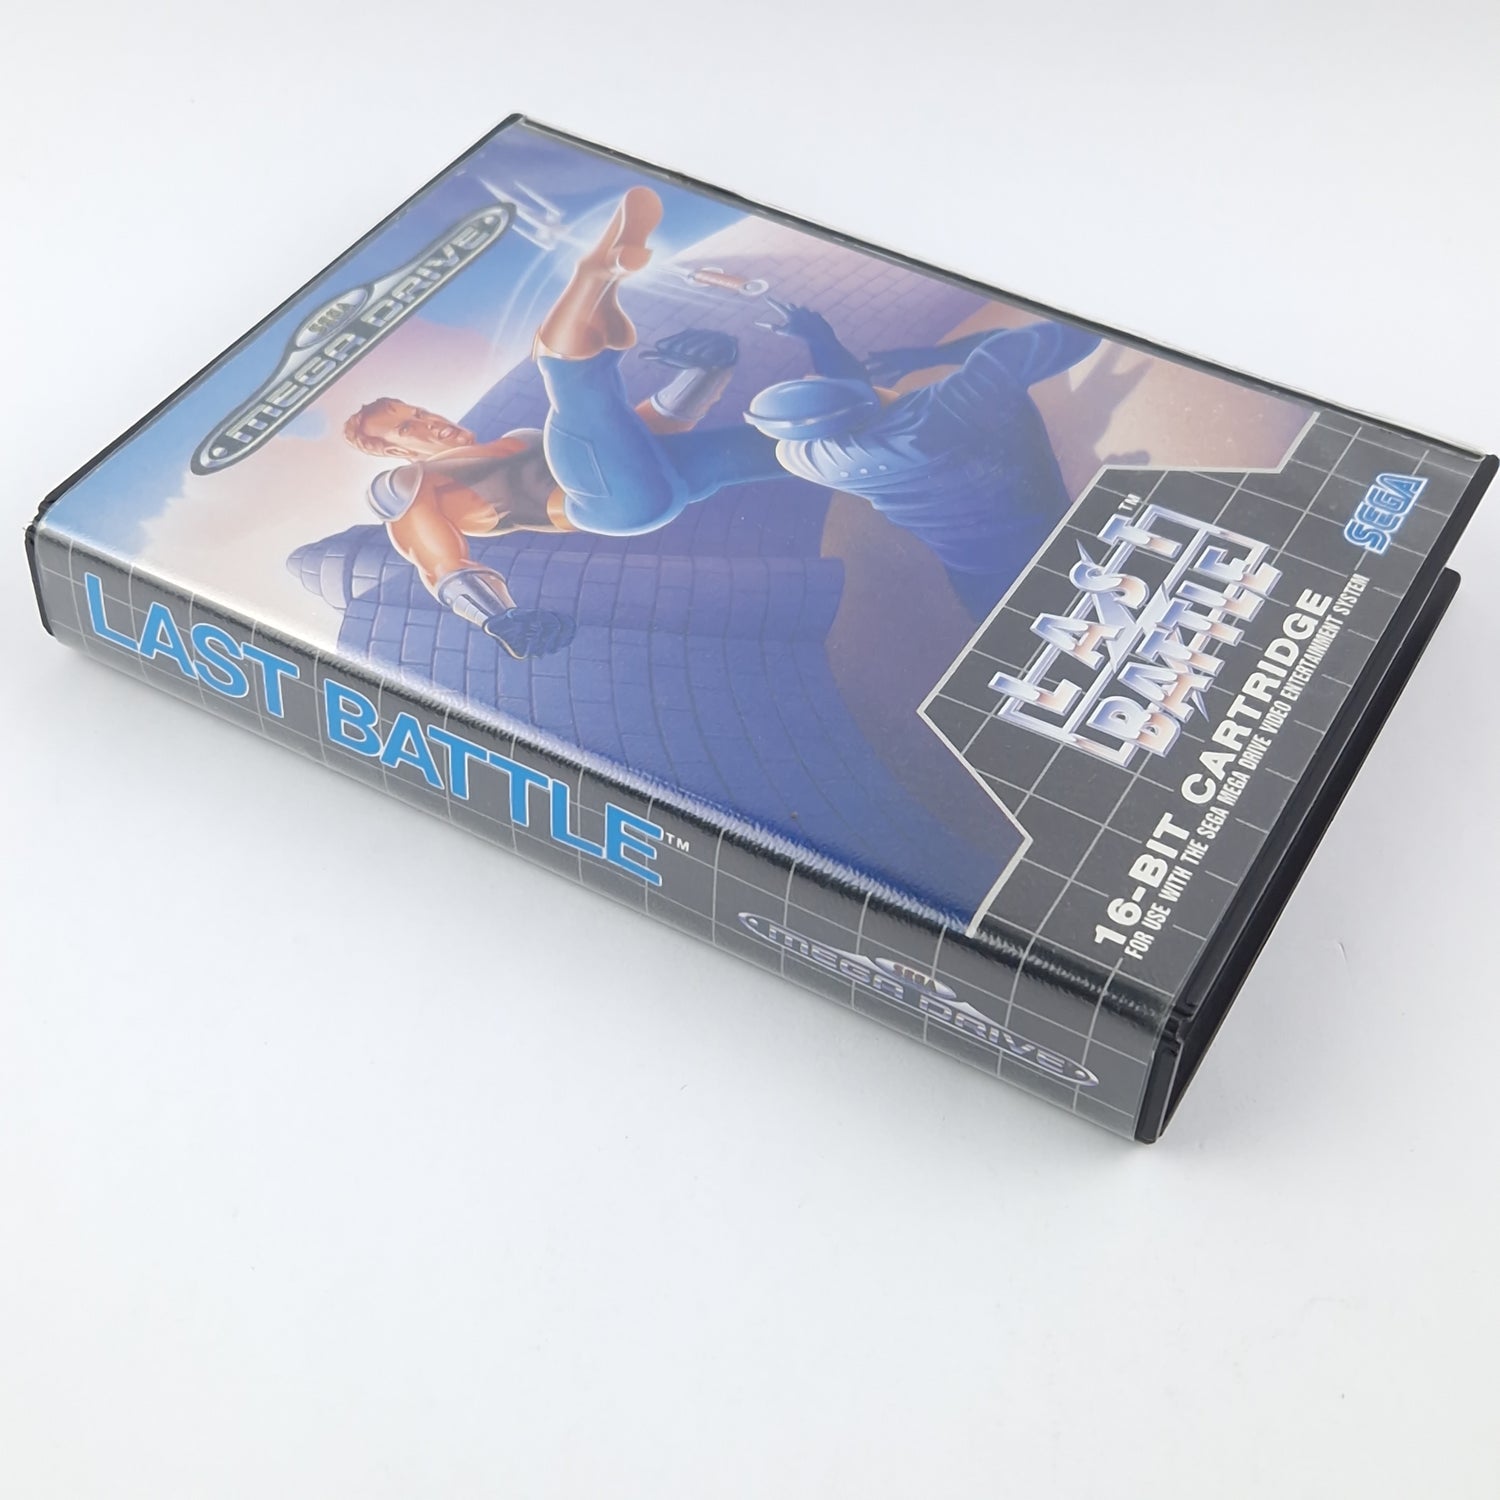 Sega Mega Drive Game: Last Battle - Module Instructions OVP cib / MD PAL Game